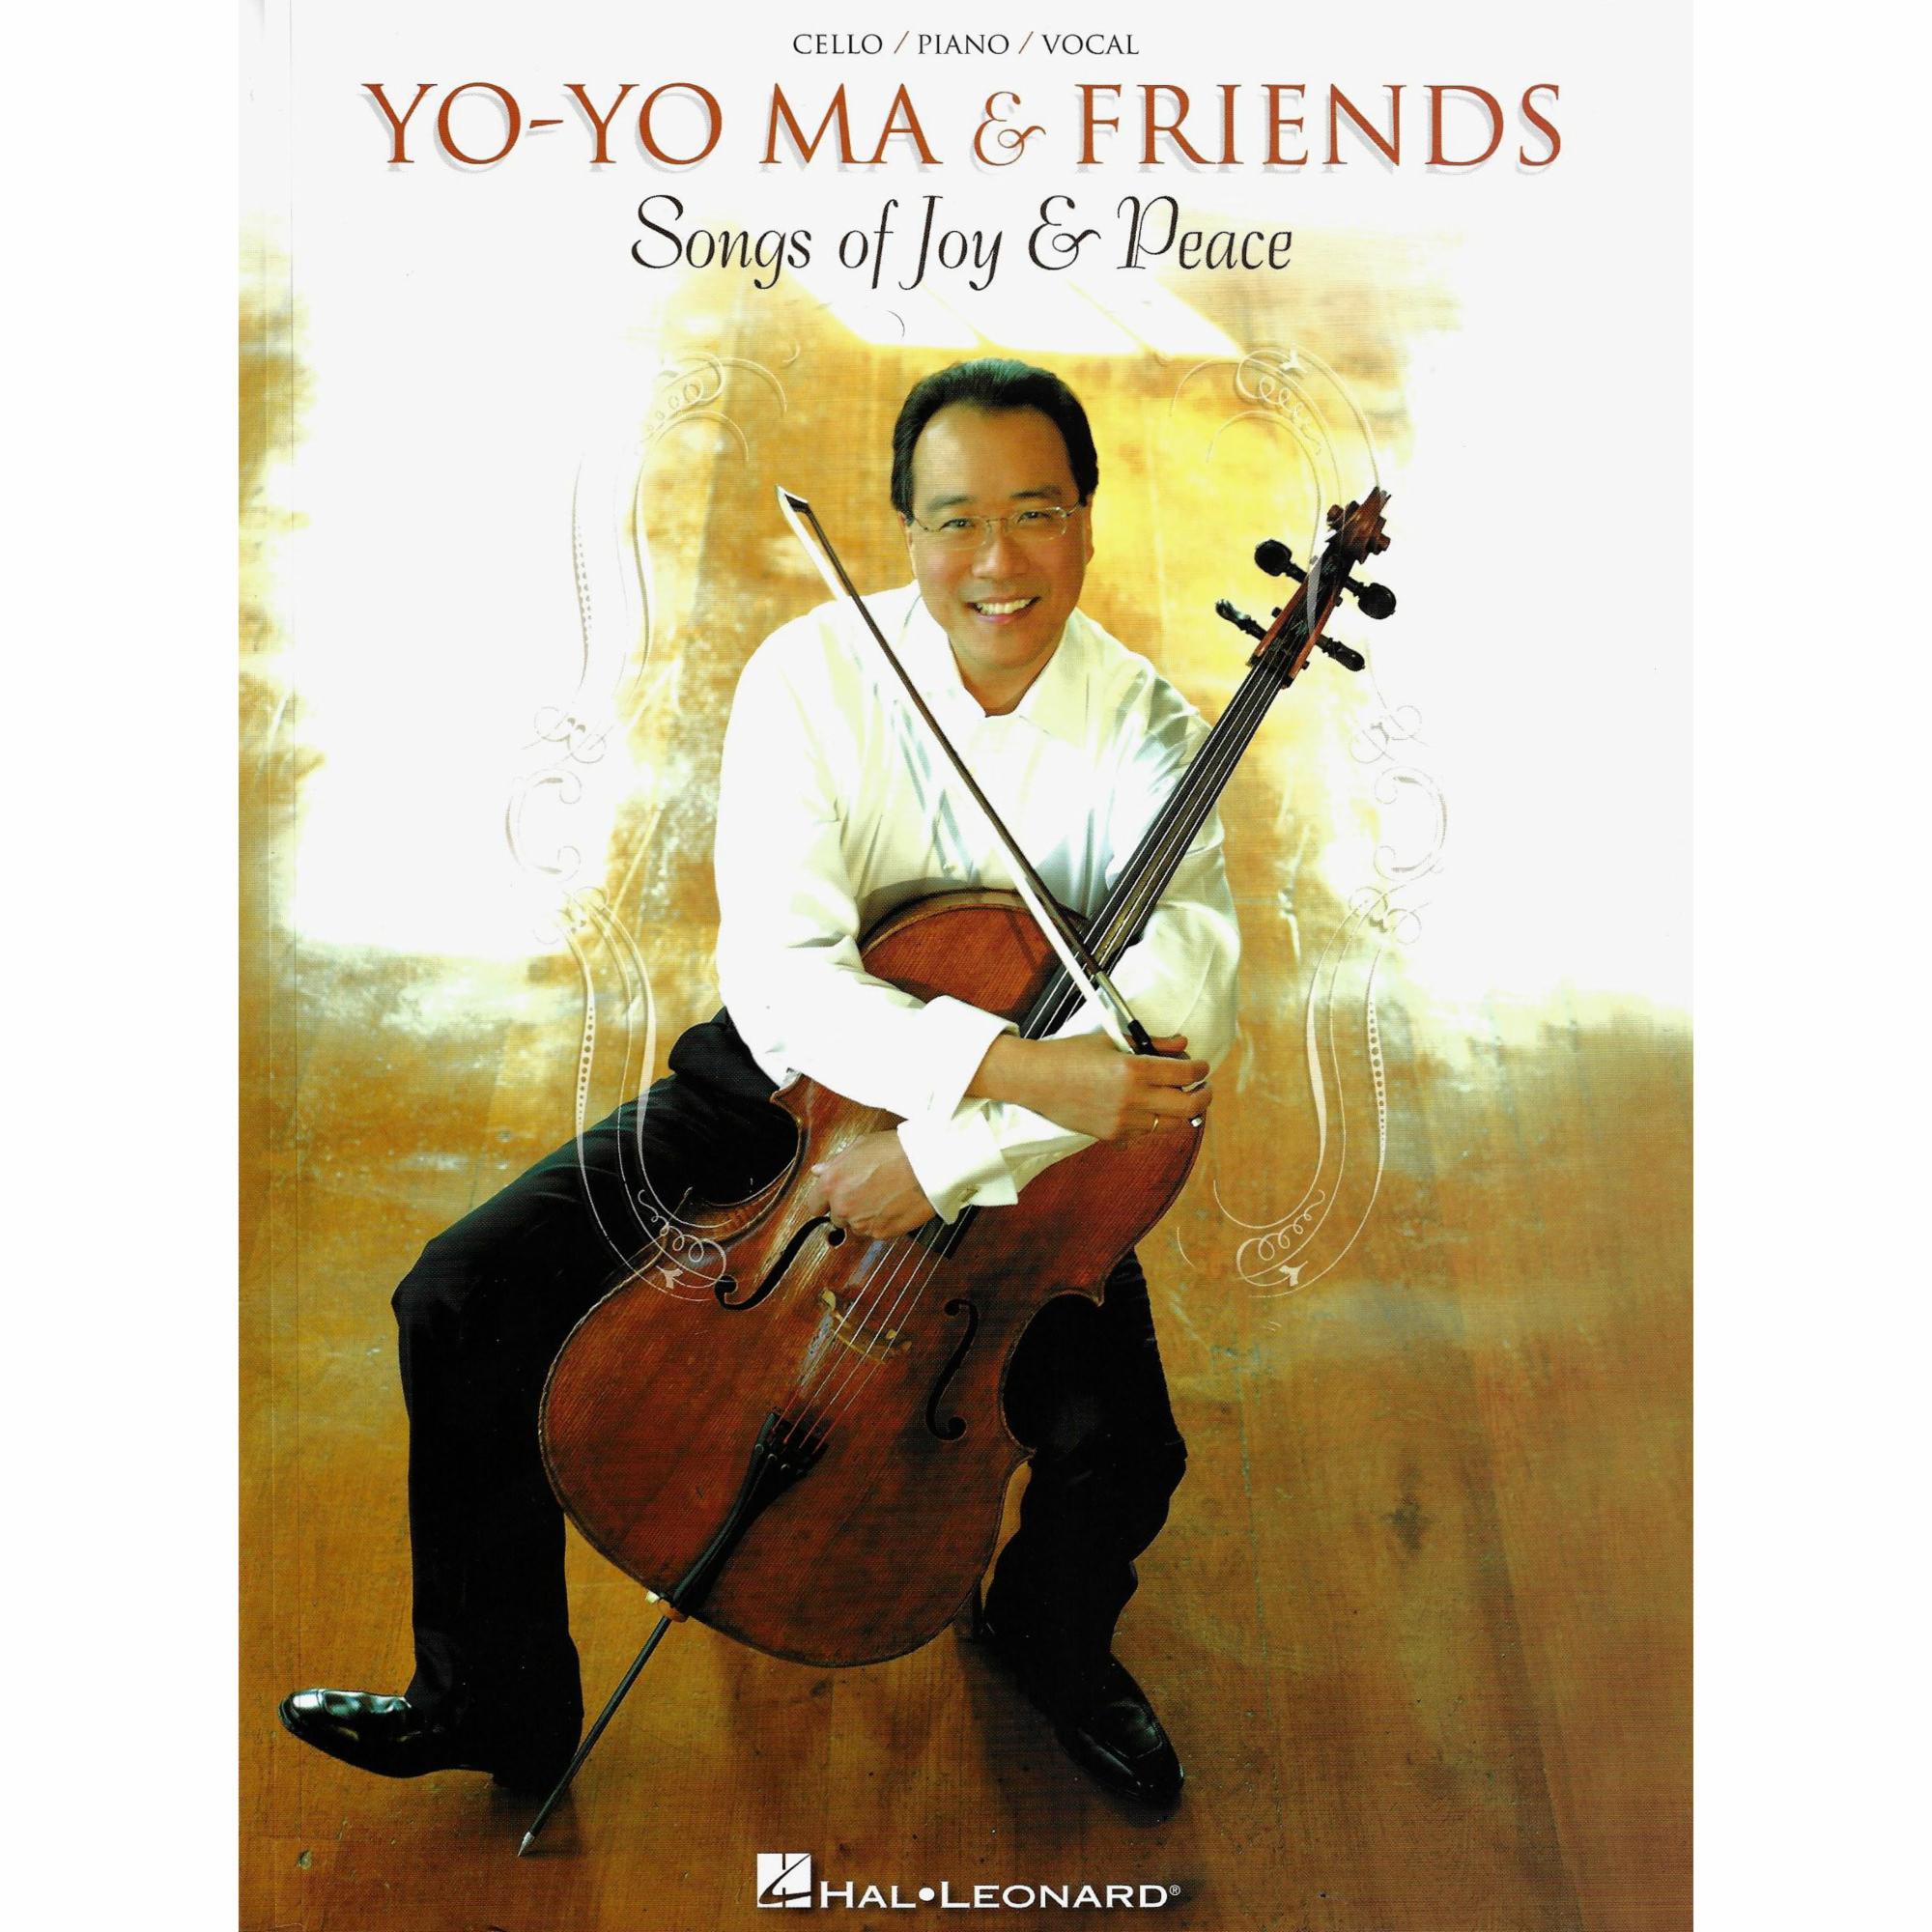 Yo-Yo Ma & Friends: Songs of Joy & Peace for Cello, Voice, and Piano